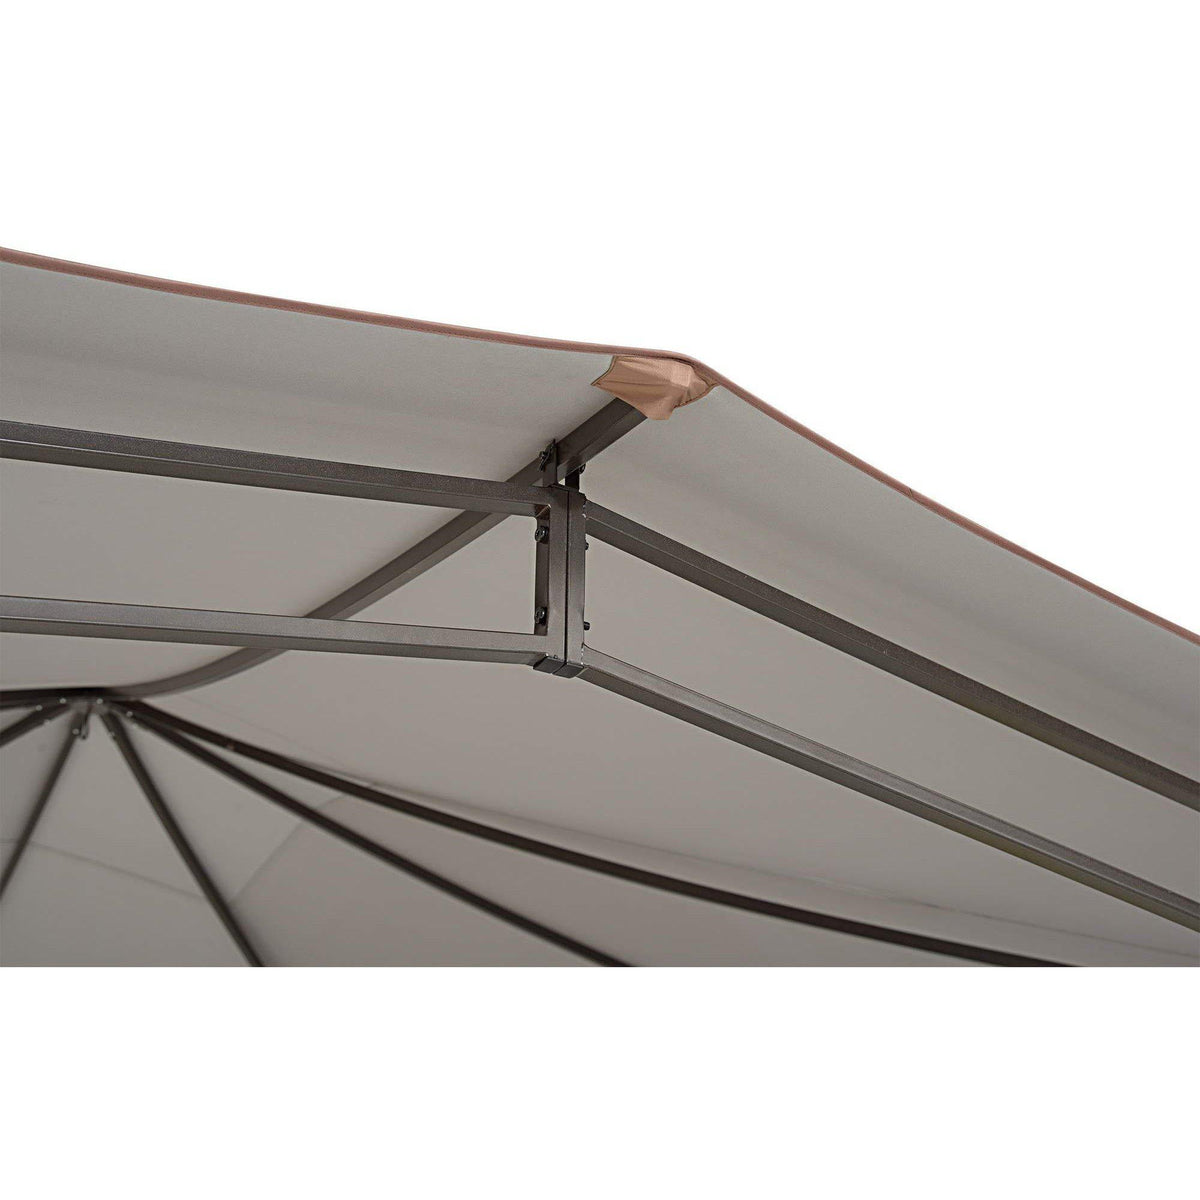 ShelterLogic Canopy Series Sequoia 12 x 12-Foot Easy Assembly Seasonal Shade UV Protection Outdoor Gazebo, 12 x 12 x 9'